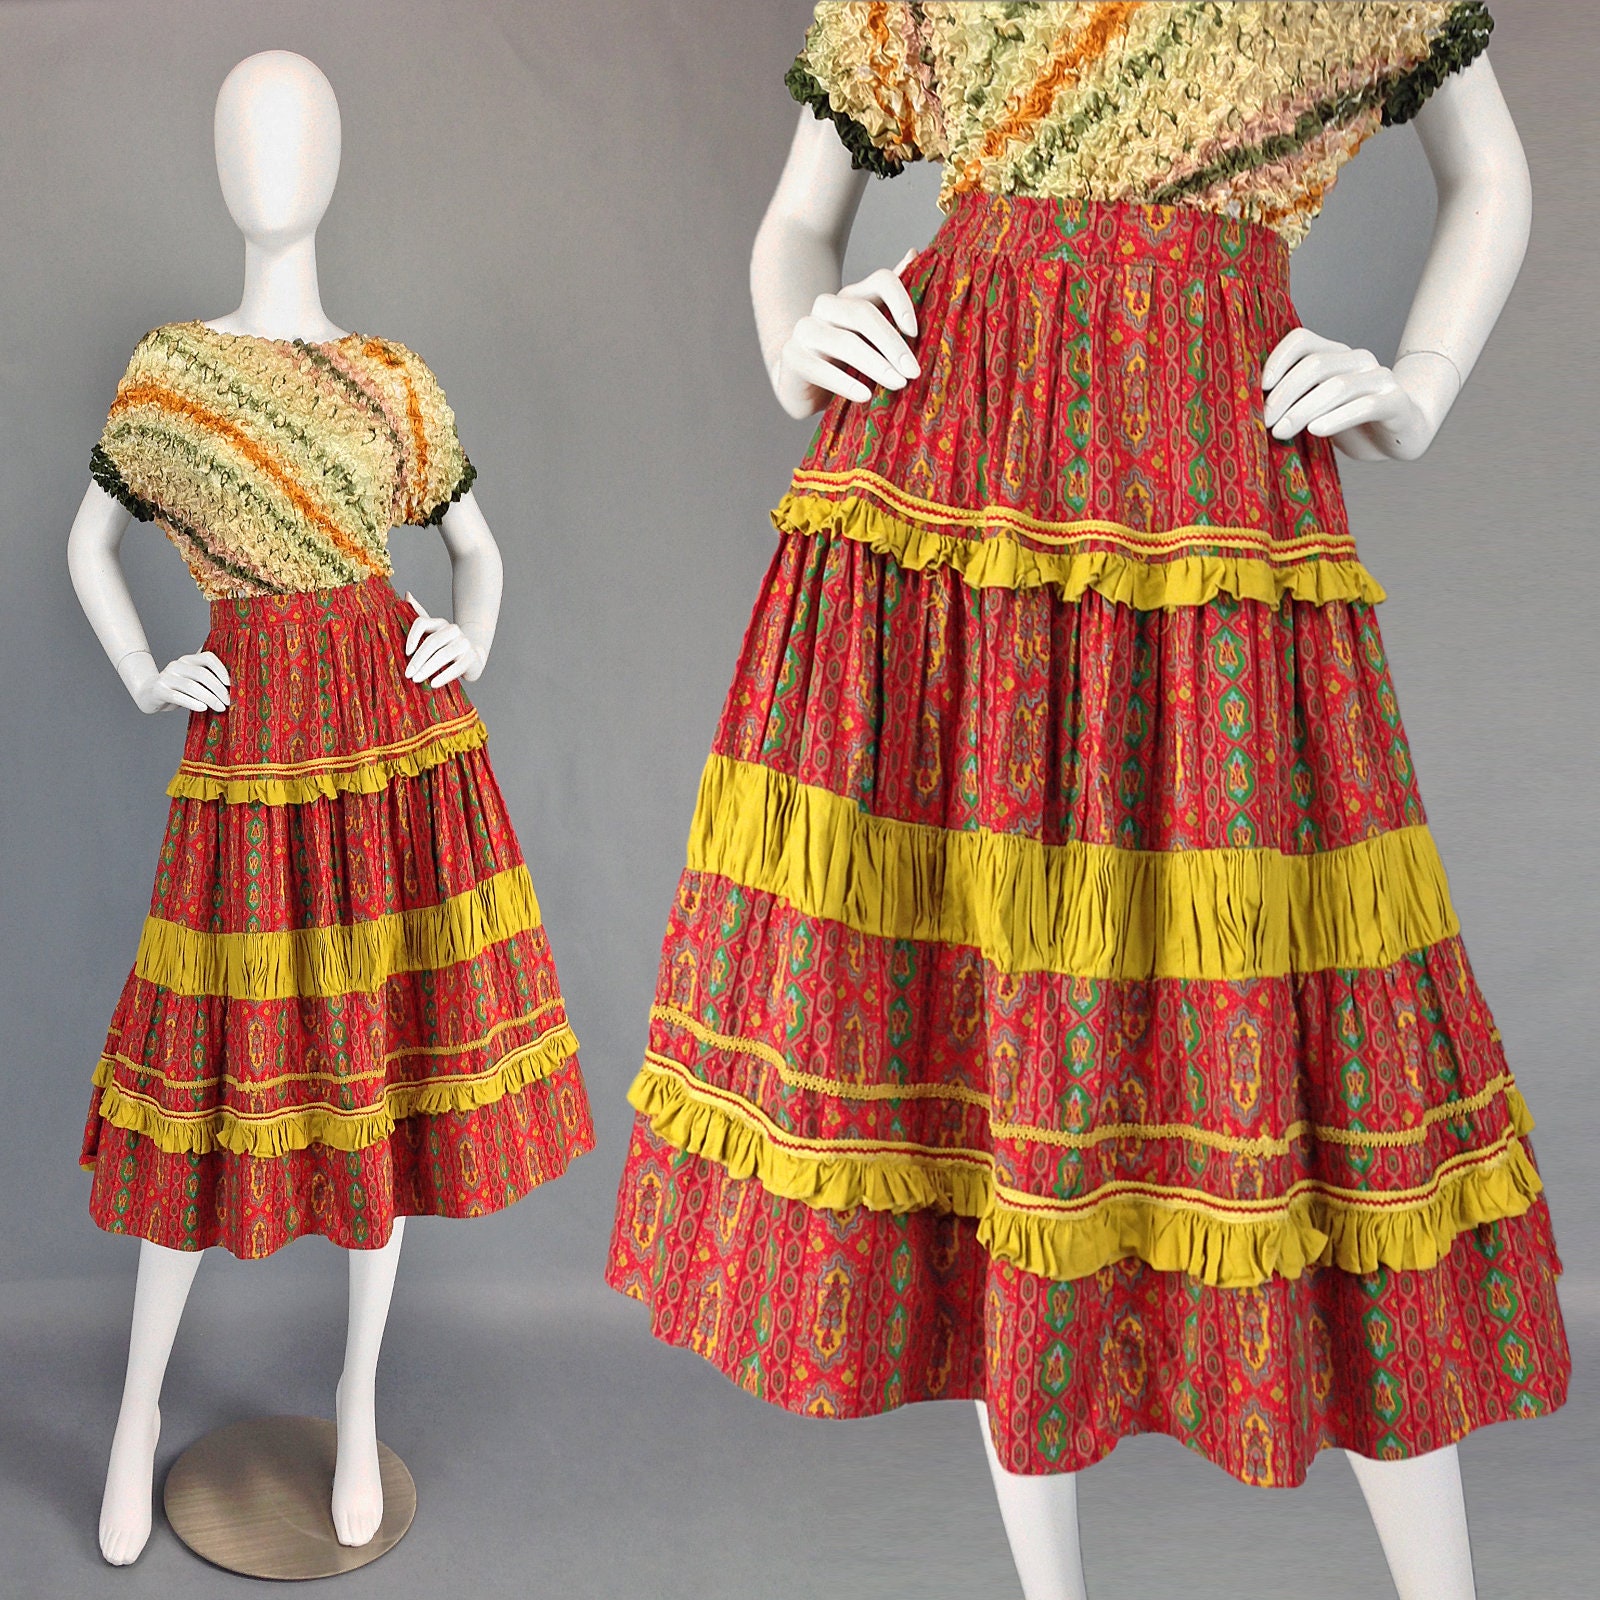 Vintage 50S Patio Skirt, Mexican Fiesta Rockabilly Carmen Circle Cotton Print Small Size 4 6 Us, 8 10 Uk